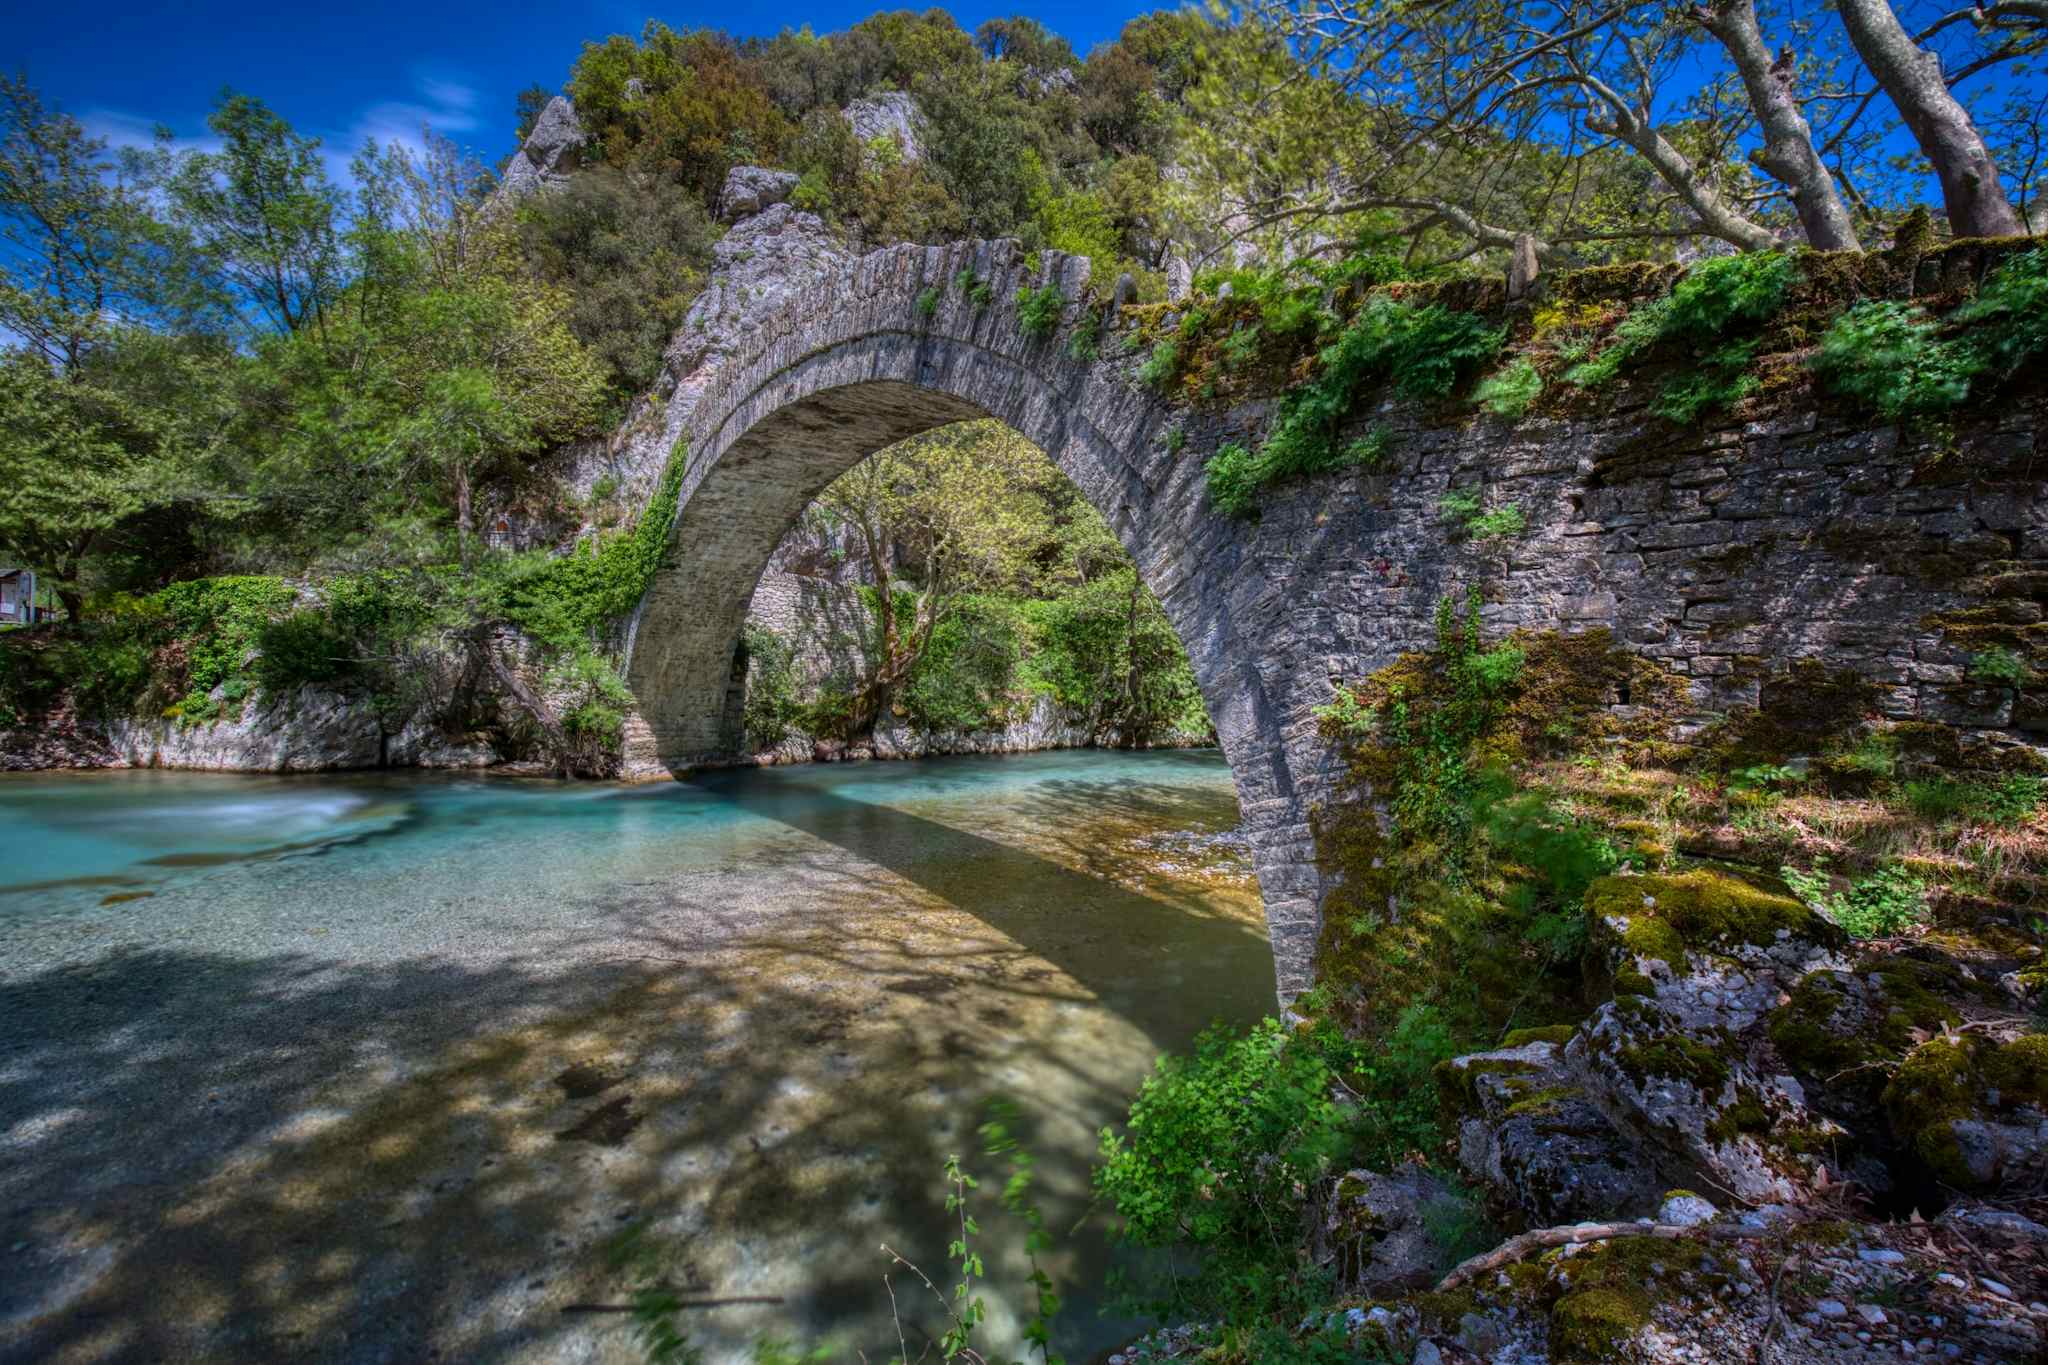 Zagori stone bridge, Greece
Canva image - https://www.canva.com/photos/MADxs1RNz1E-old-stone-bridge-in-klidonia-zagori-epirus-greece-/